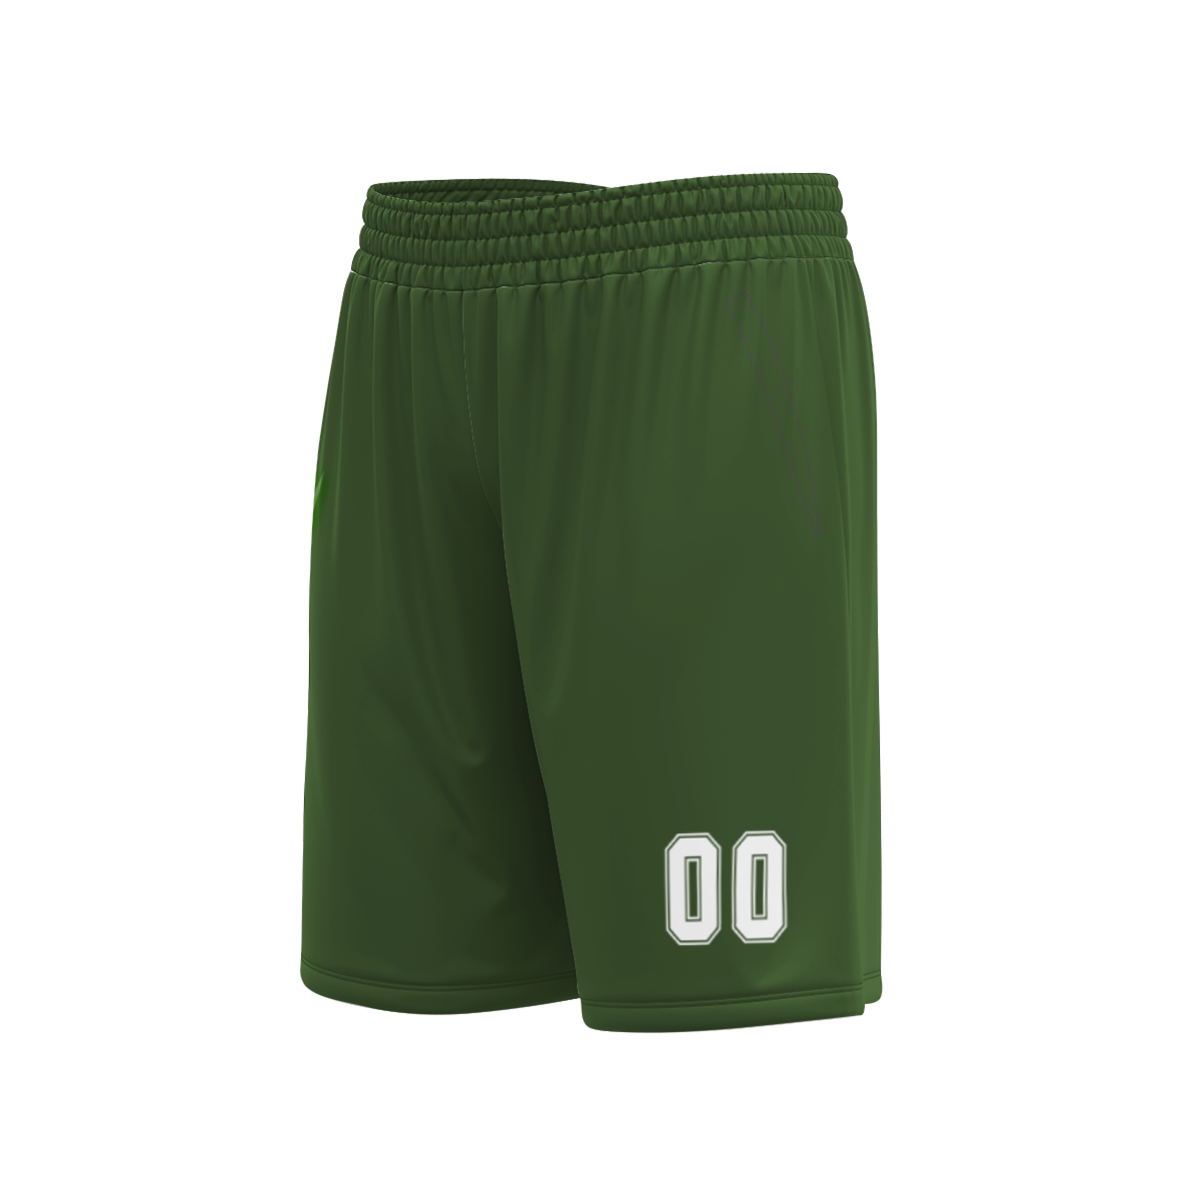 factory-oem-service-custom-basketball-uniforms-printed-sport-clothes-summer-basketball-jerseys-at-cj-pod-8